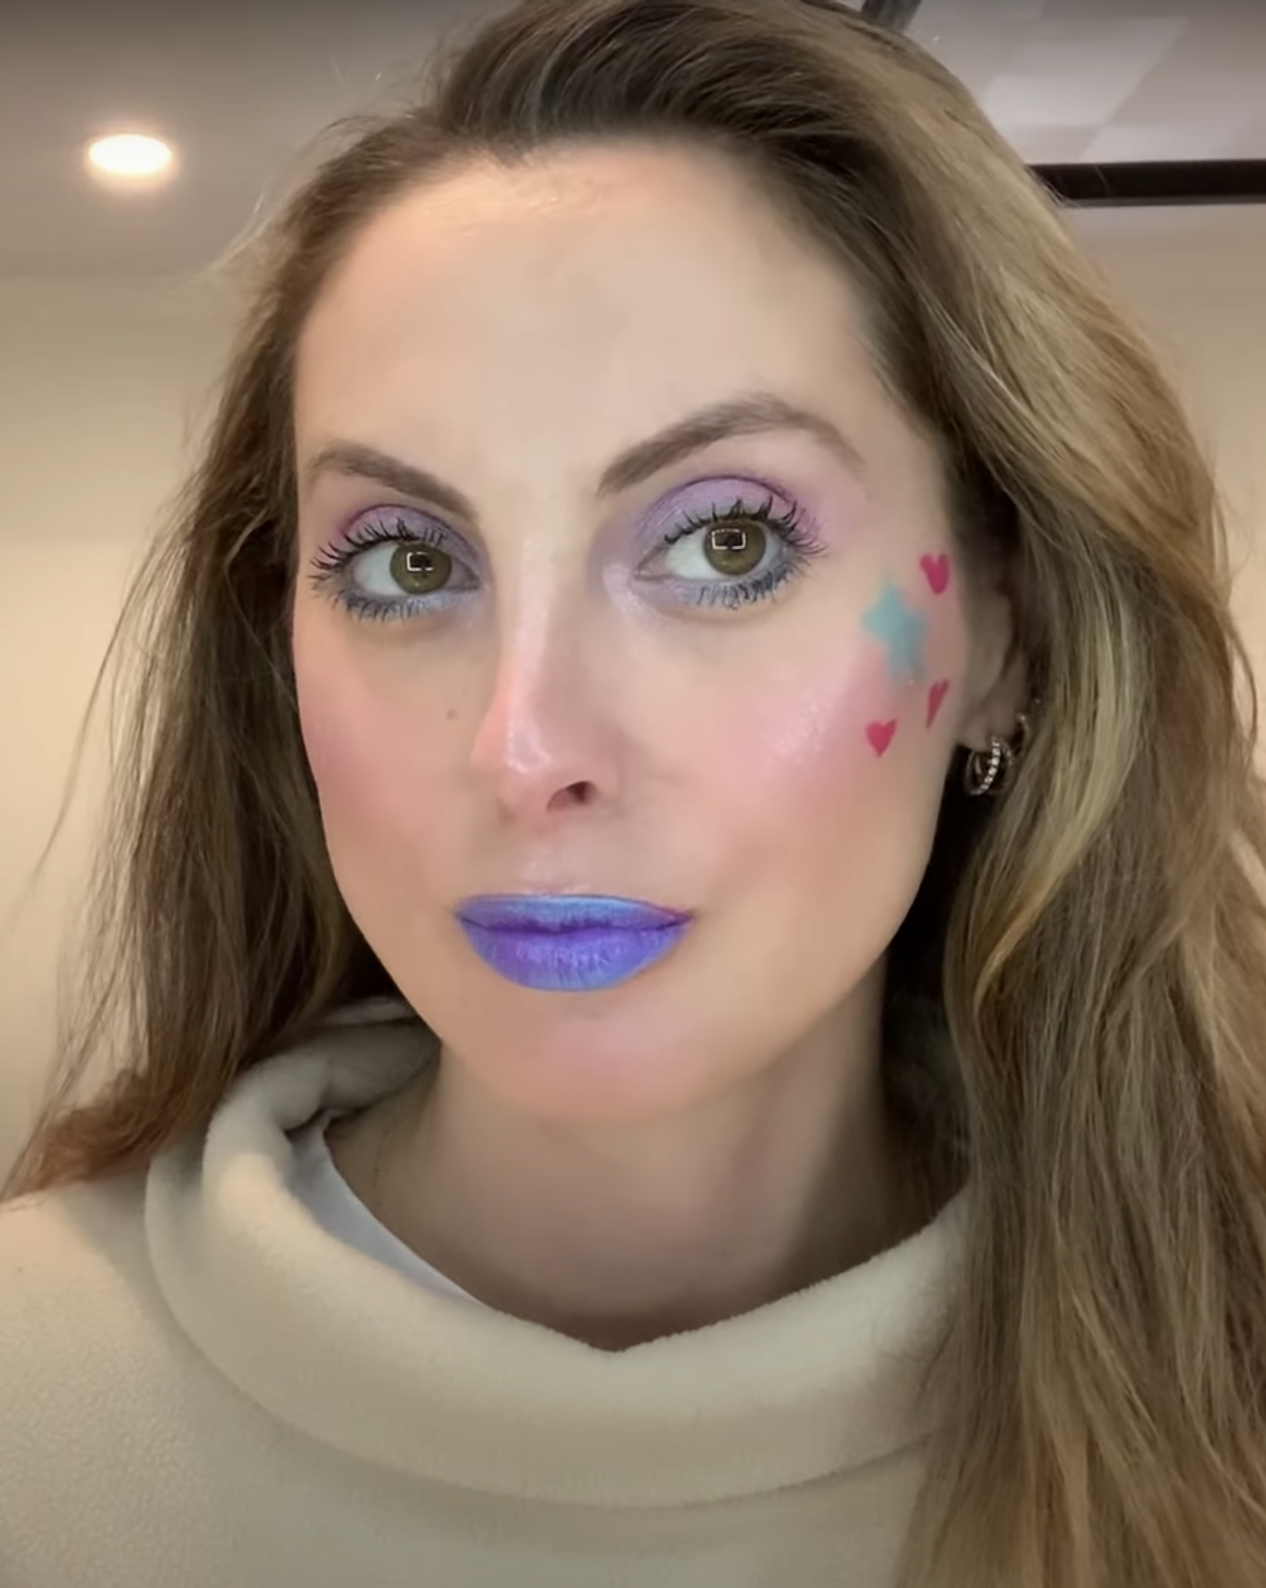 Eva Amurri shares two easy halloween makeup tutorials